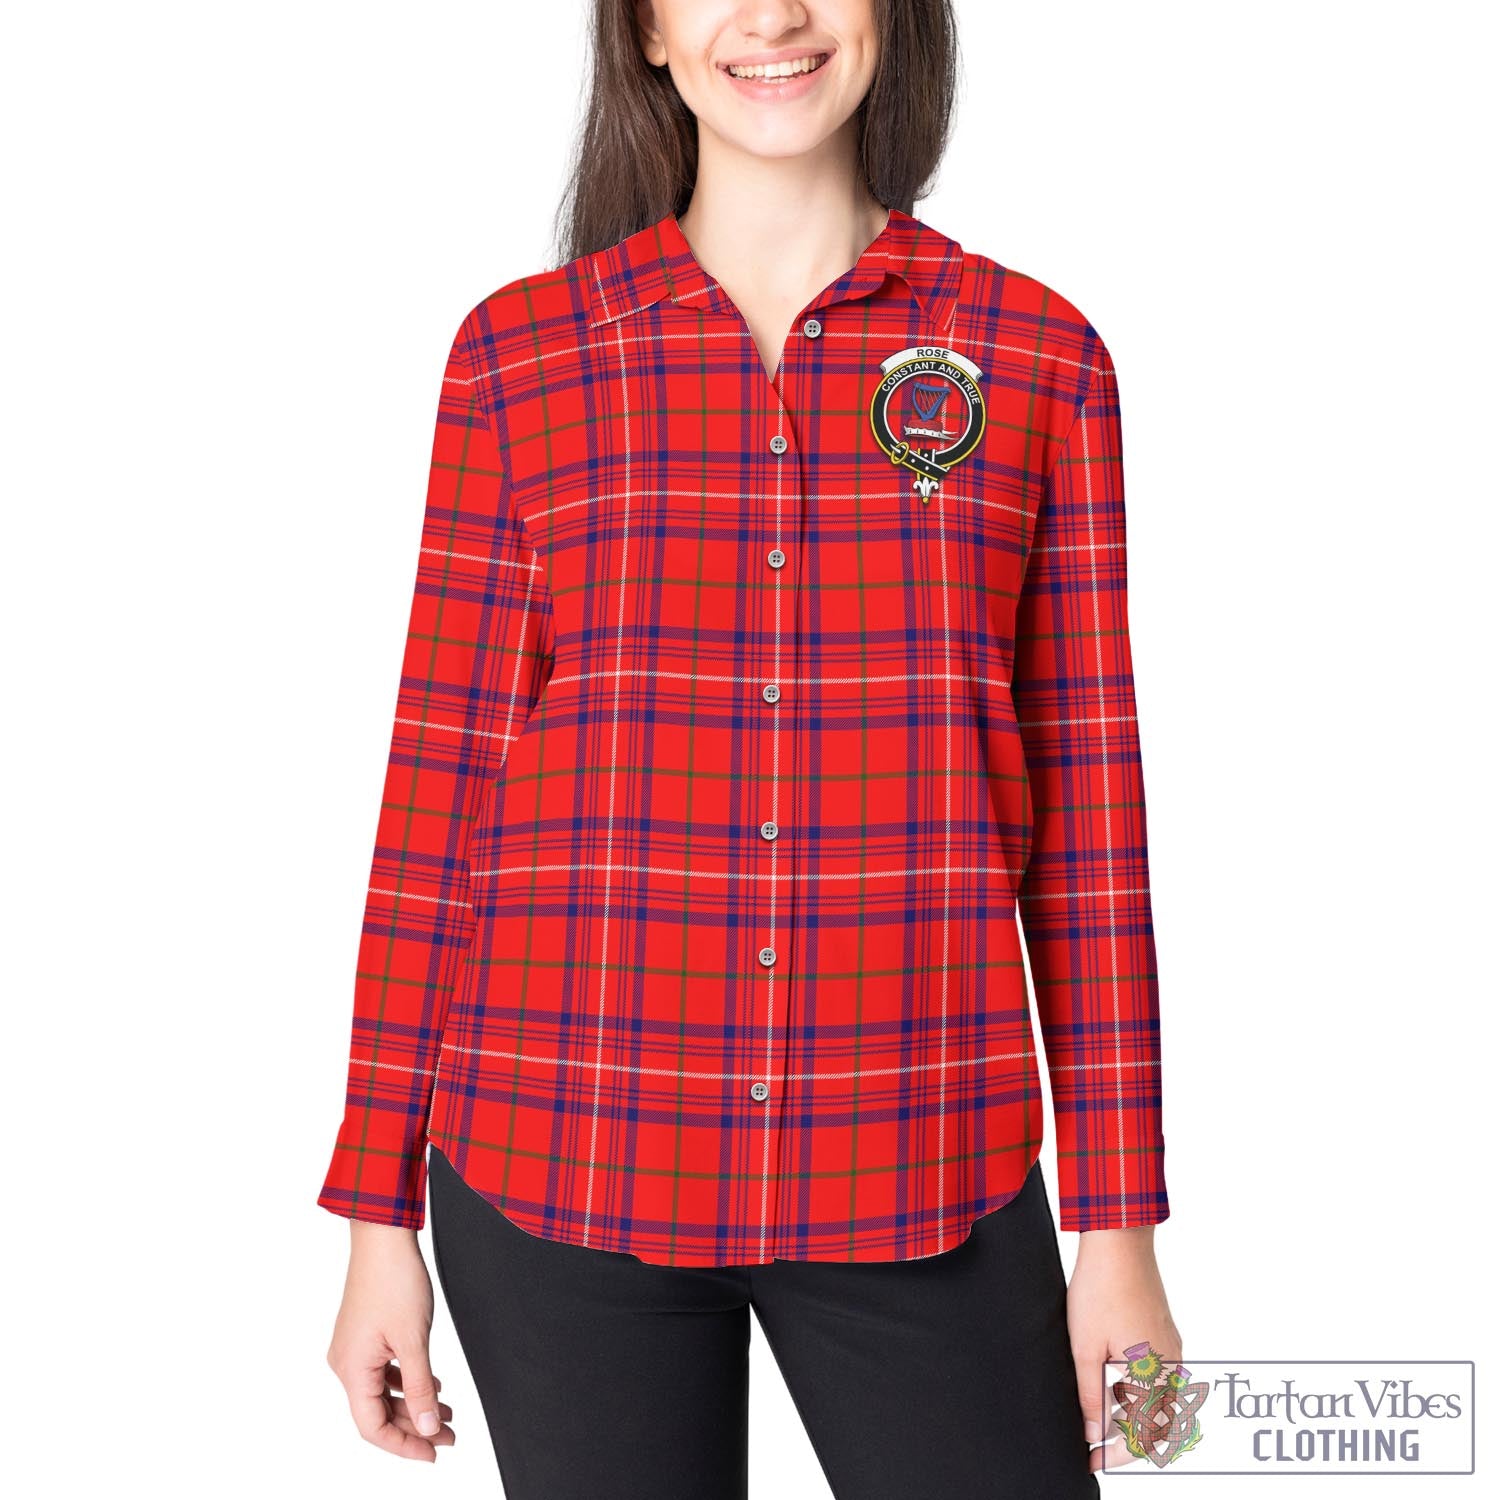 Tartan Vibes Clothing Rose Modern Tartan Womens Casual Shirt with Family Crest